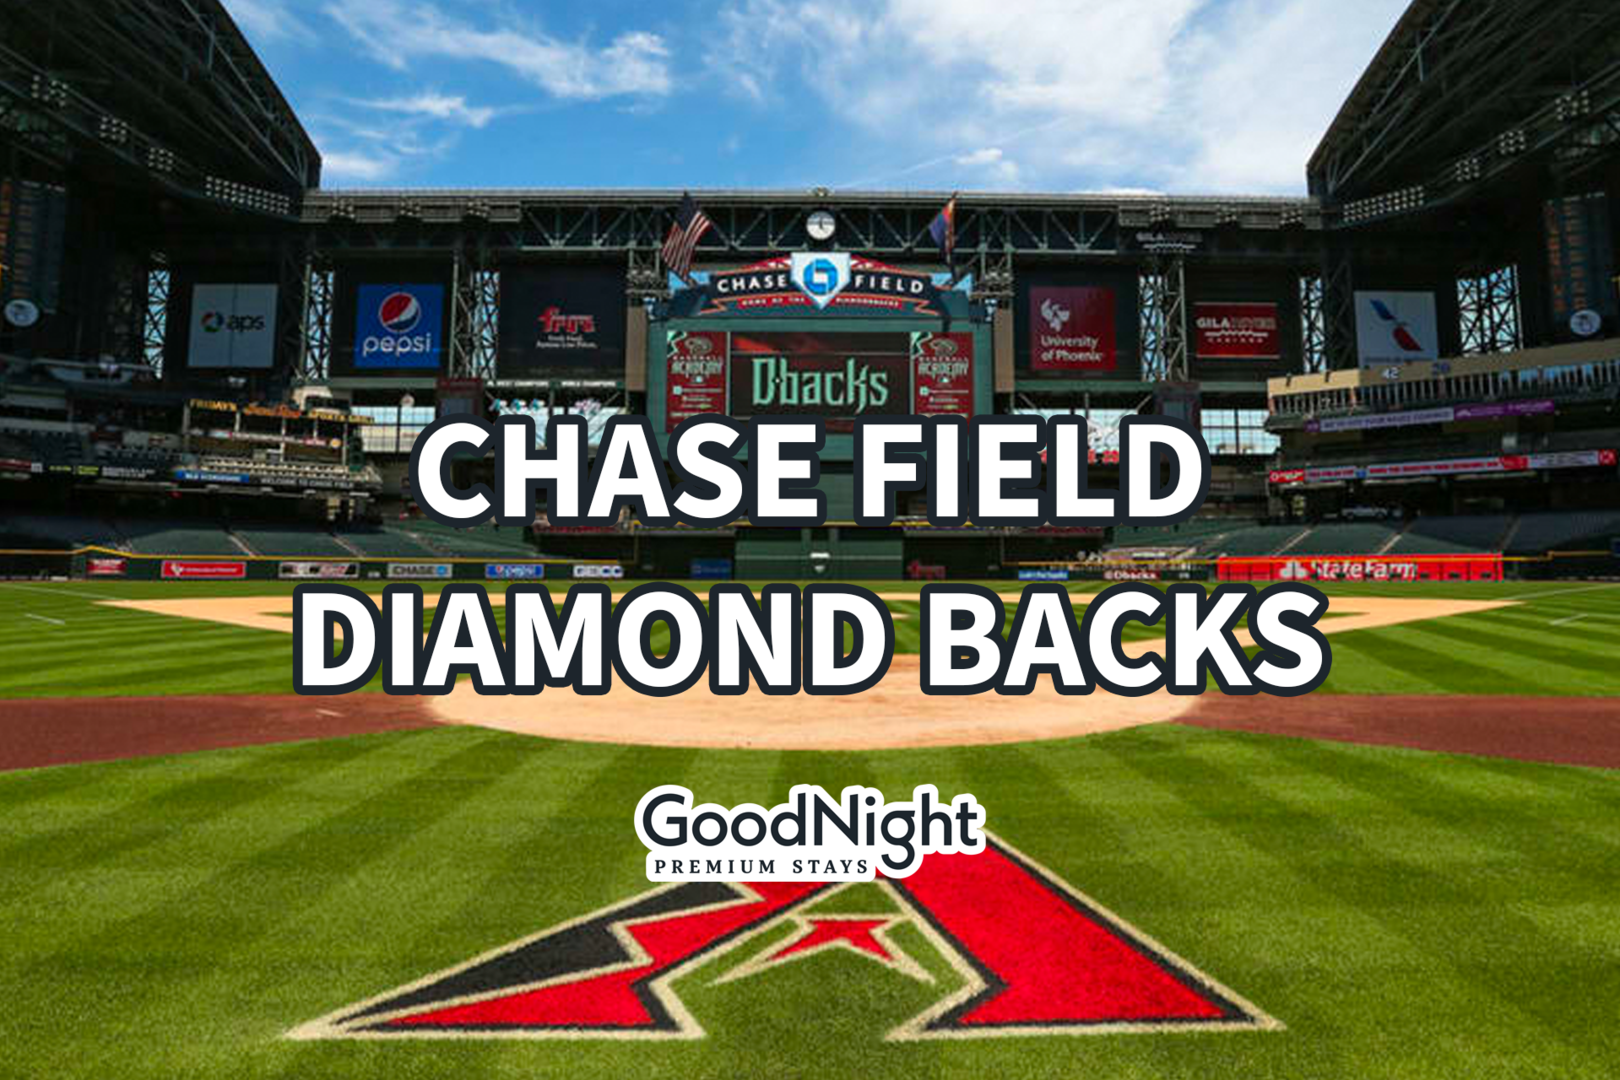 Chase Field - Home to the AZ Diamondbacks